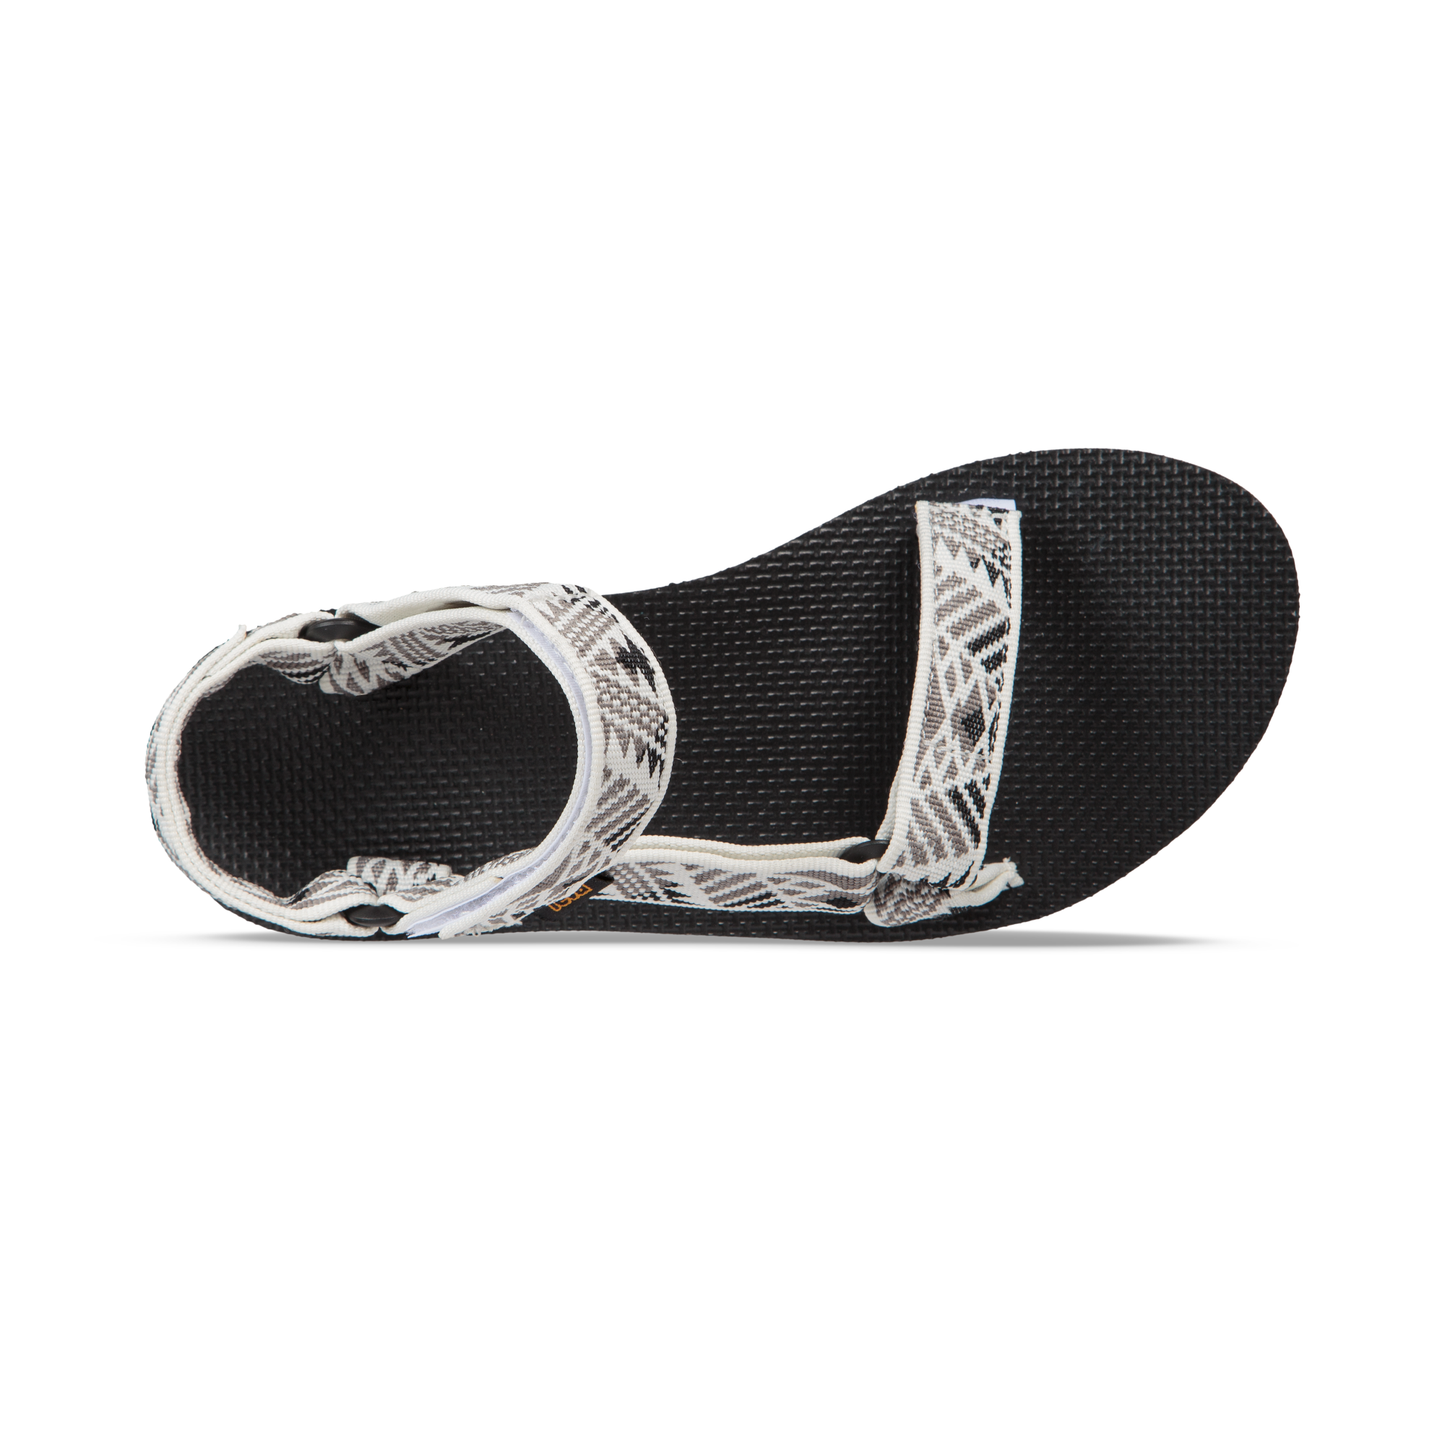 Teva Women's Original Universal Sandal - Boomerang White/Grey